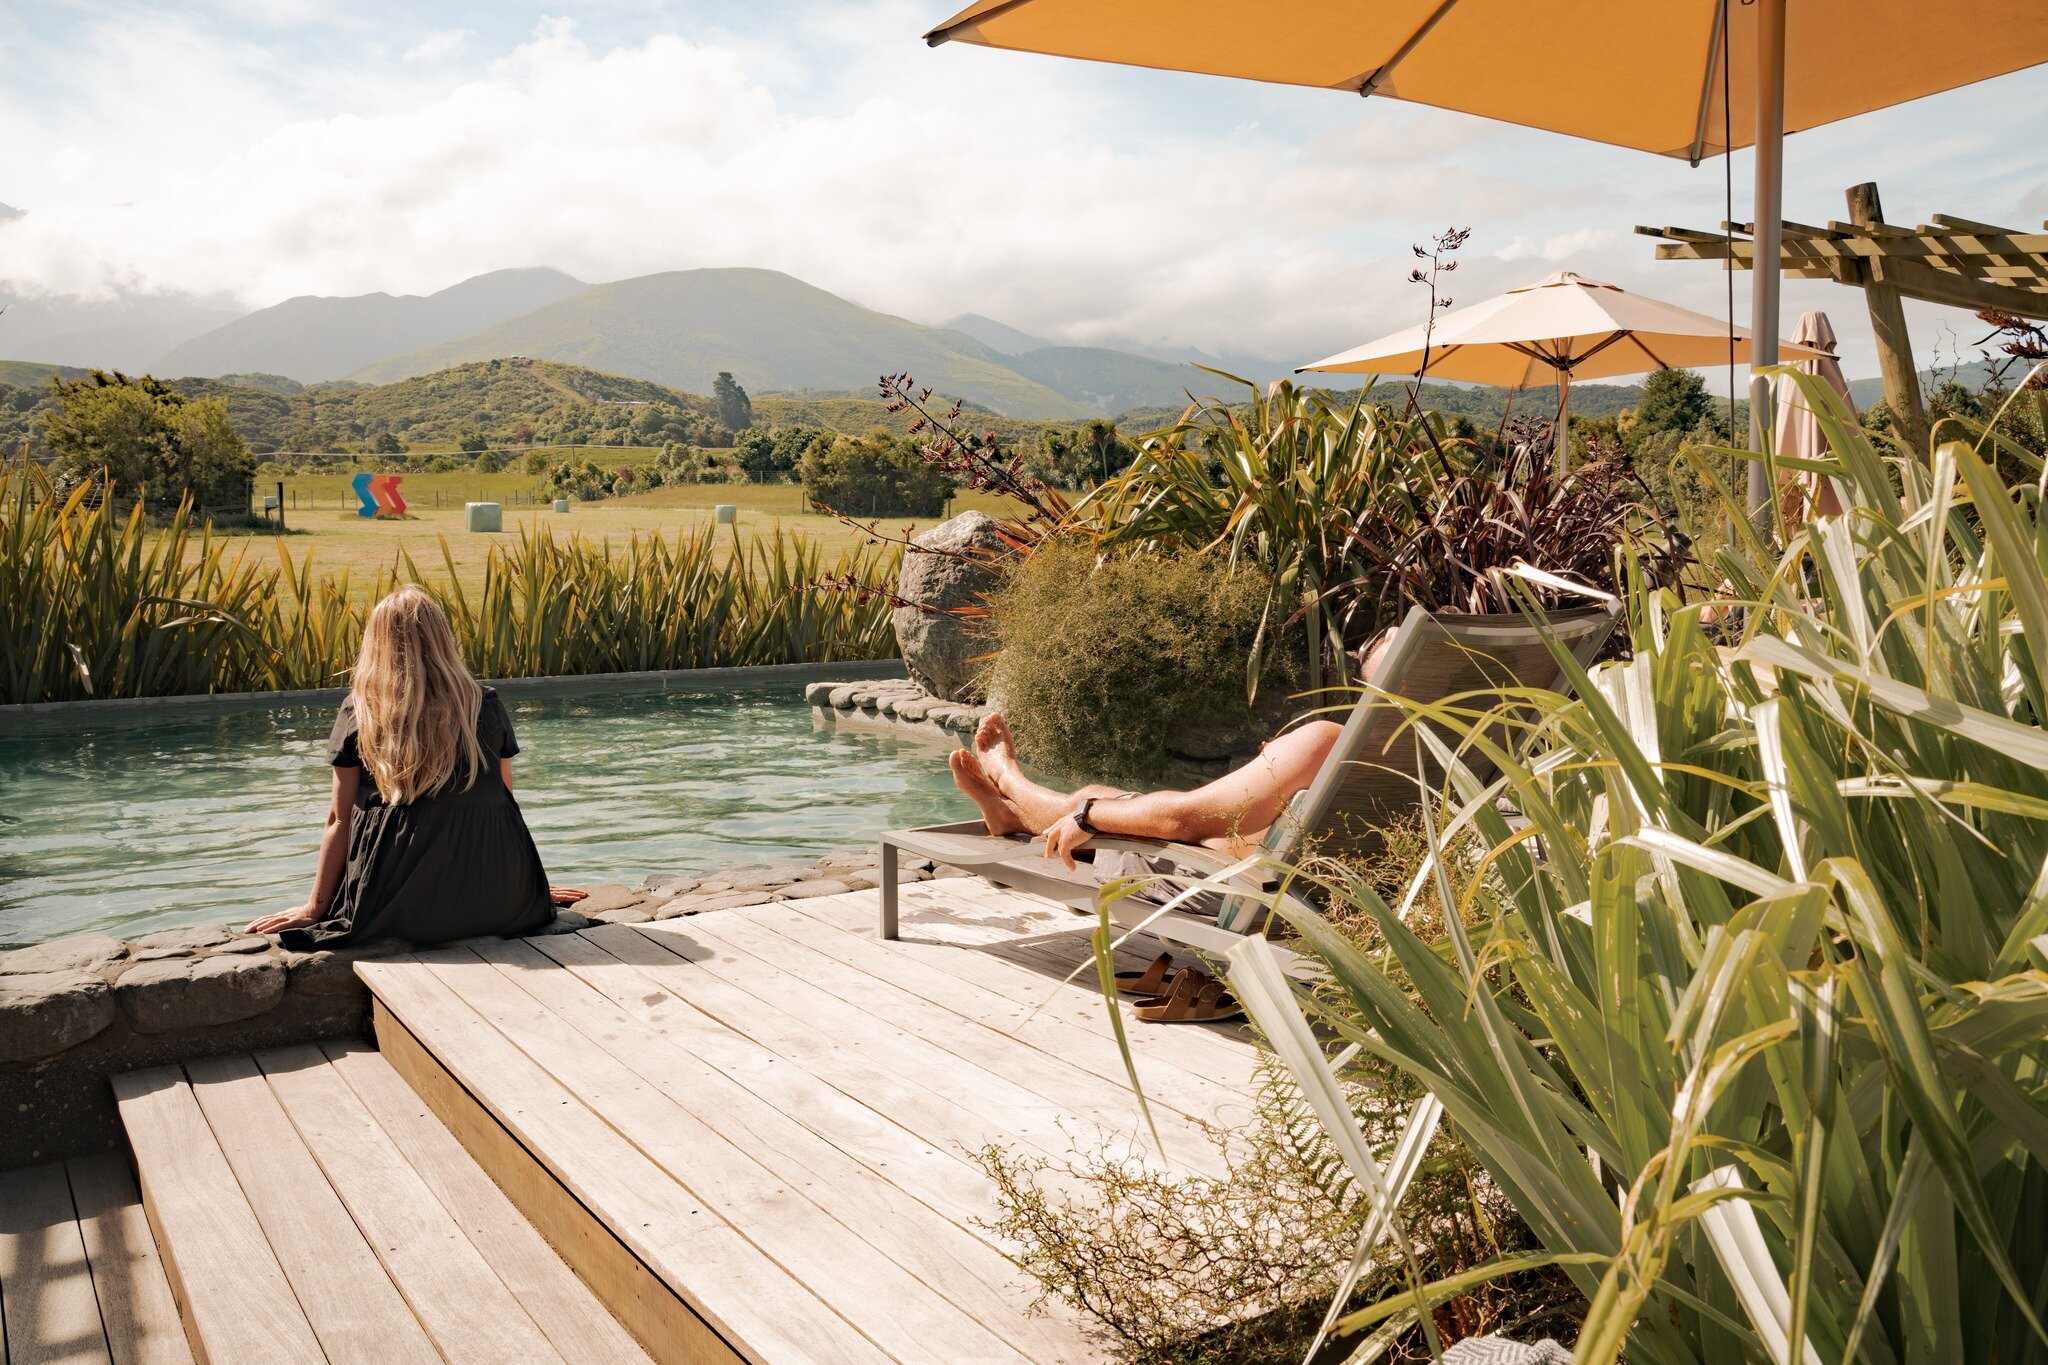 Pool days and this view on repeat.

📸 @nanikanter

#hapukulodge #newzealand #uniquelykaikoura #luxurylodgesnz #luxurytravel #luxurylodges #IfYouSeekNZ #NZMustDo #romanticgetaway